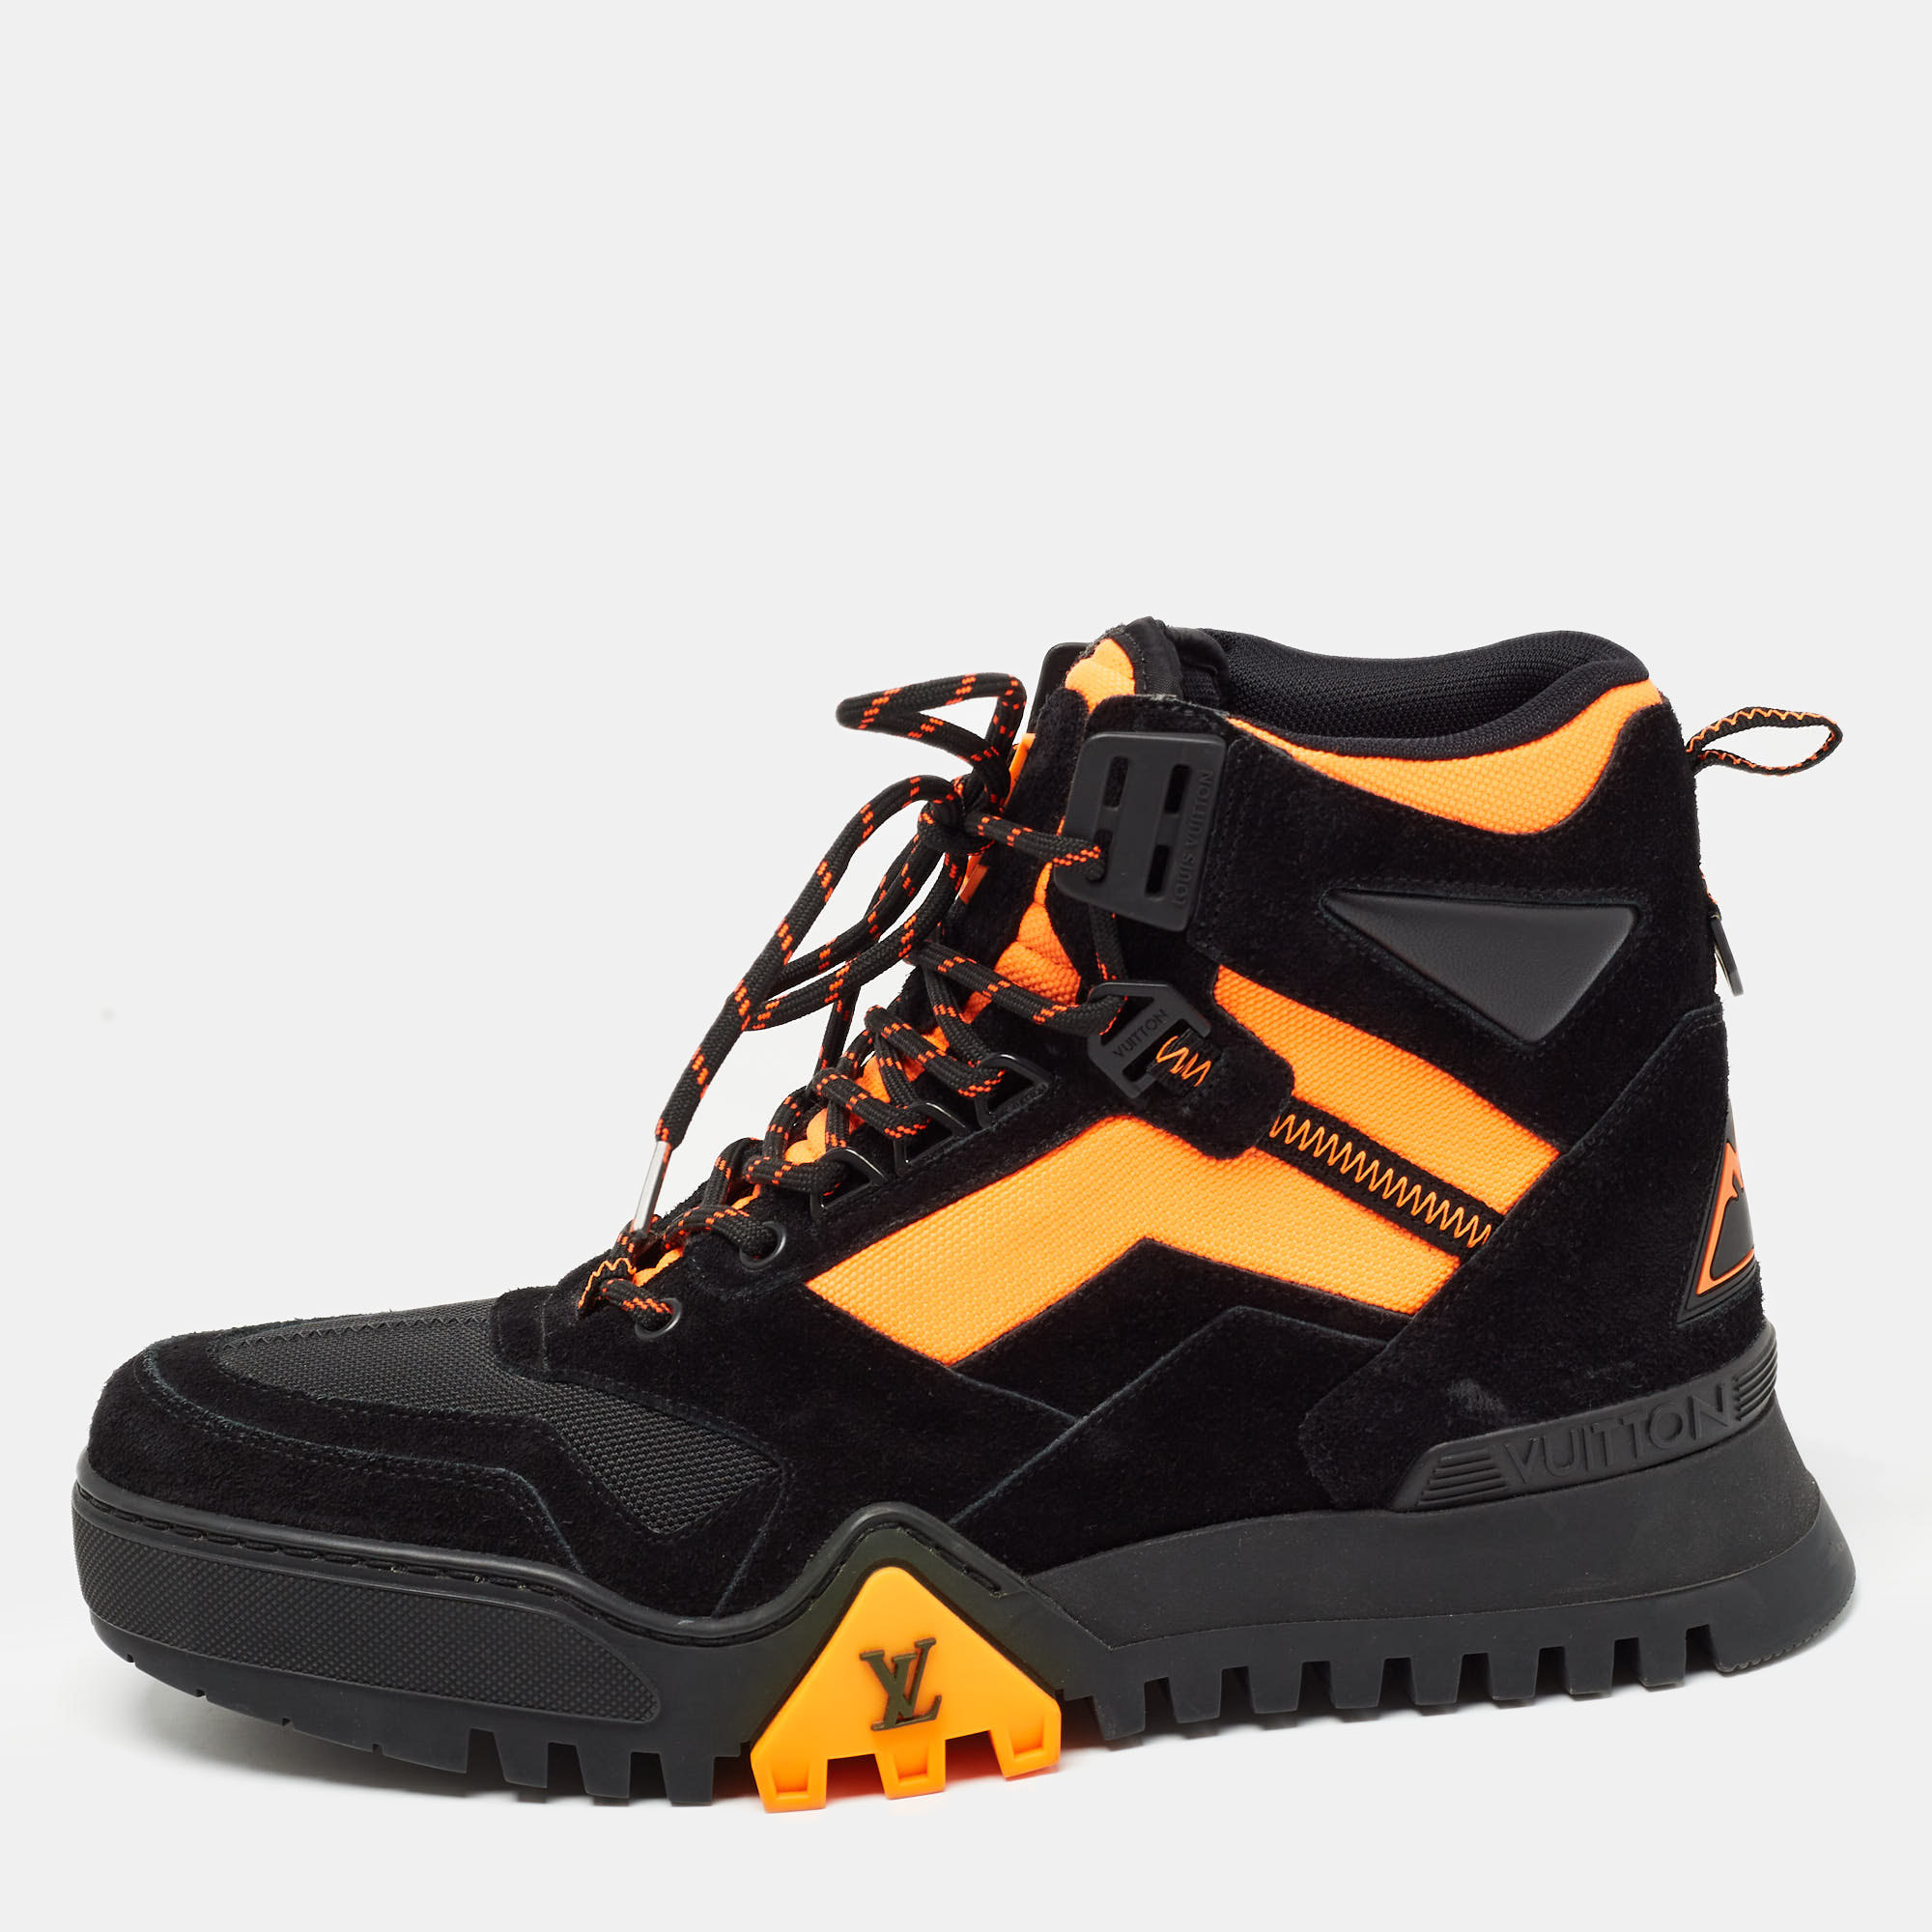 Louis vuitton black/orange suede and canvas lv hiking boots size 42